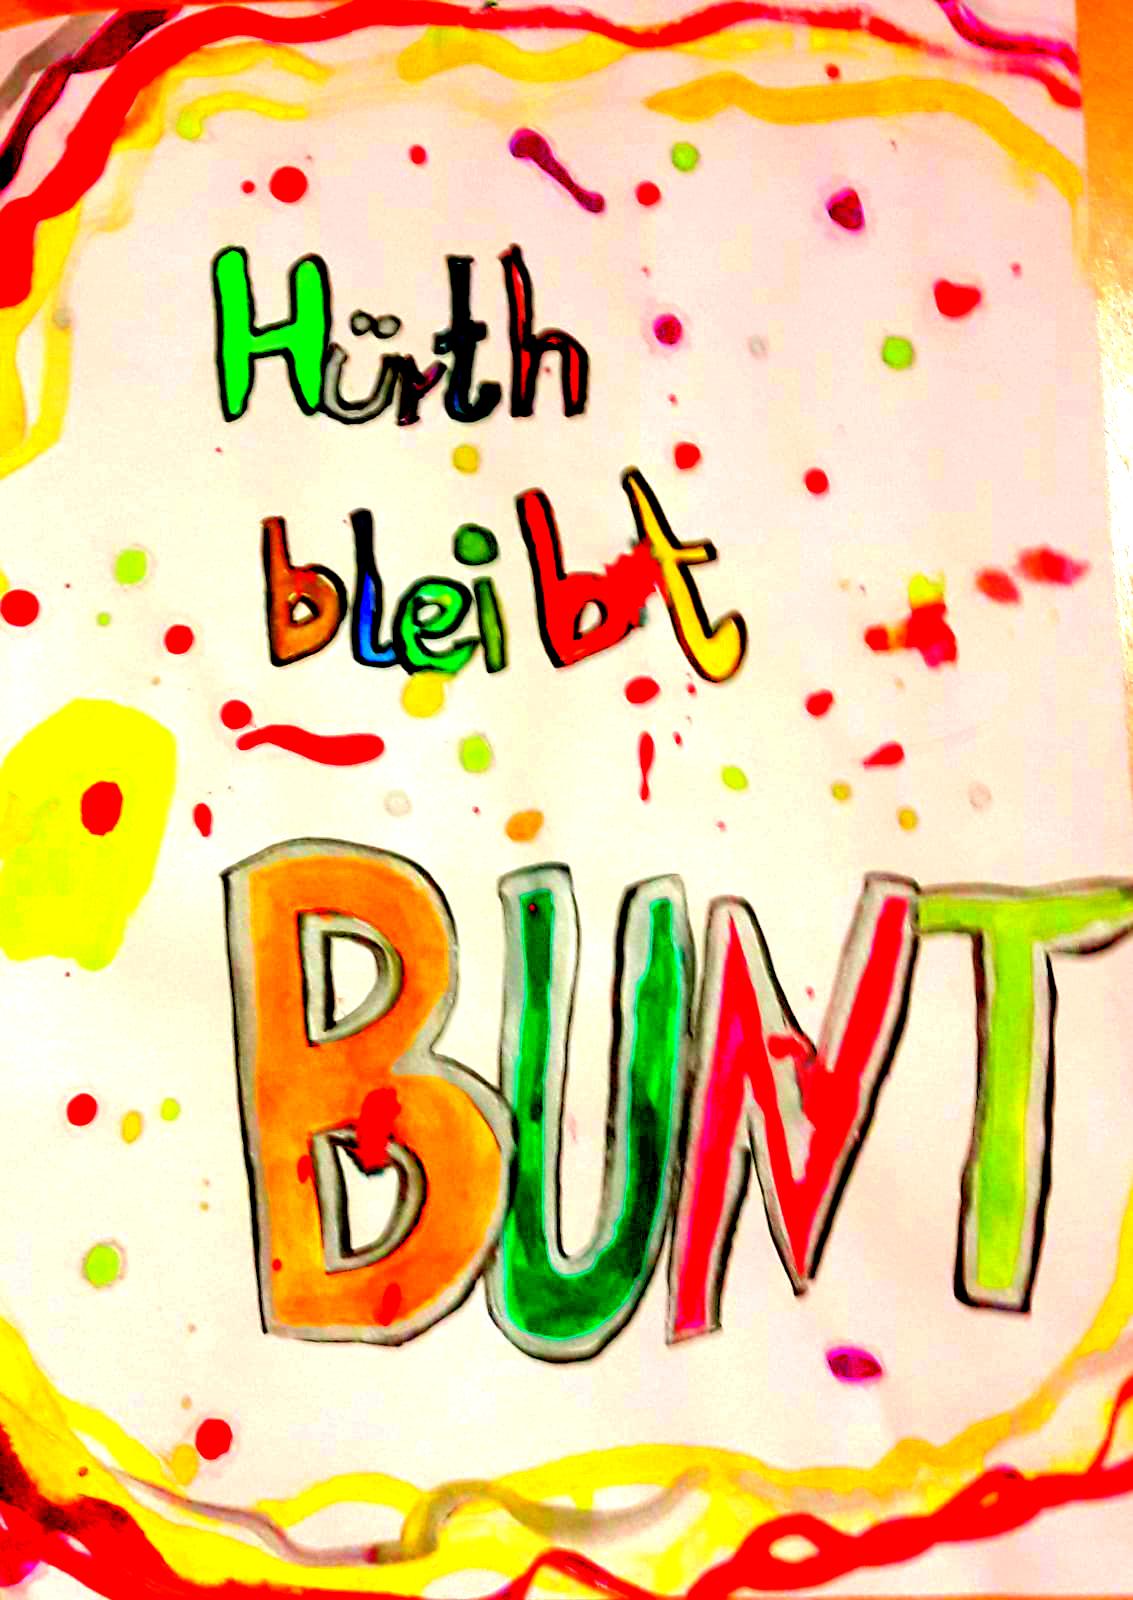 "Hürth bleibt bunt!" Plakat